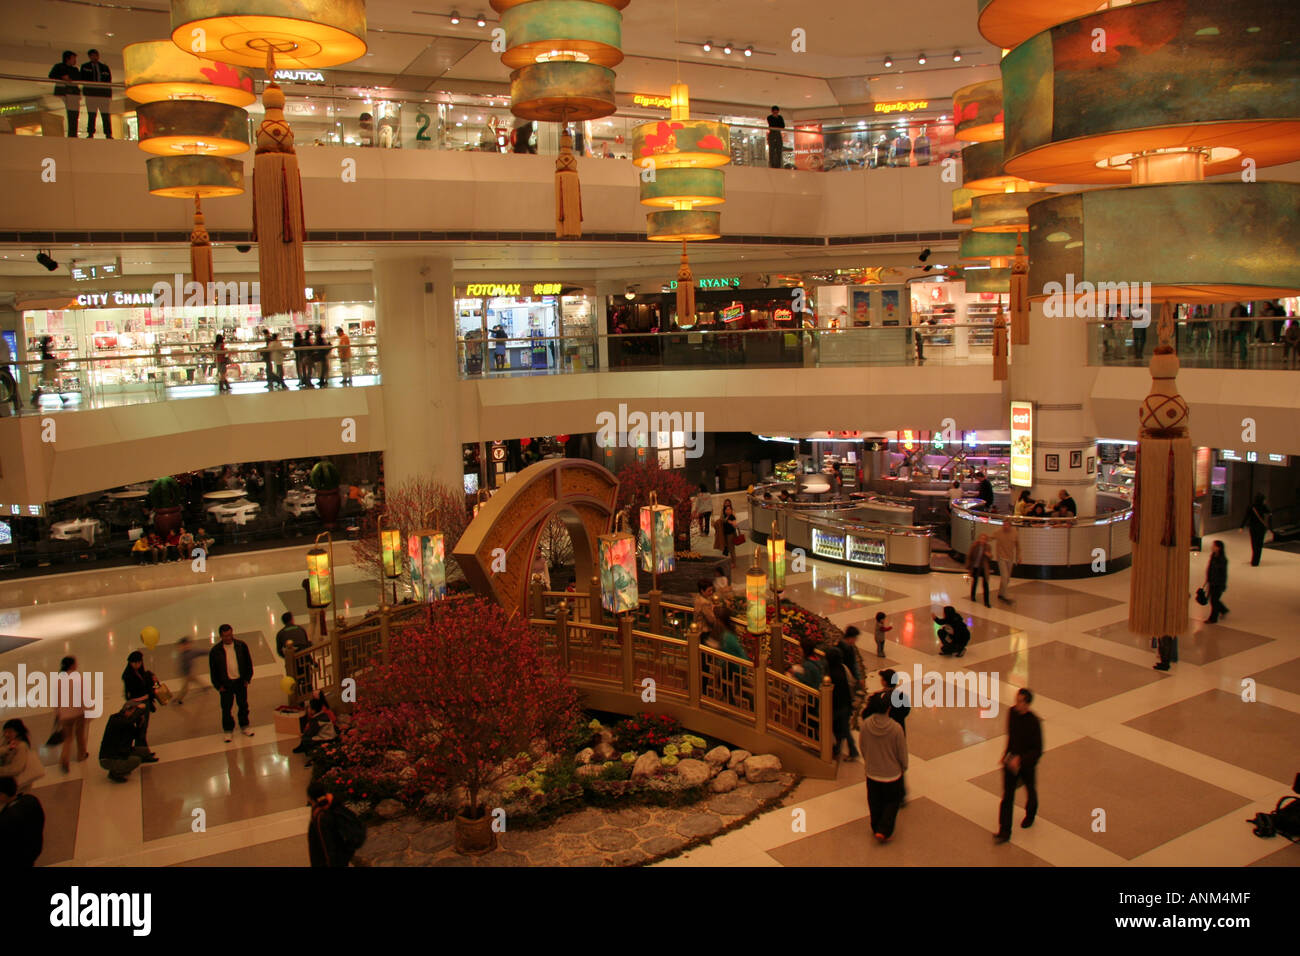 Pacific Place Mall, Hong Kong Stock Photo - Alamy